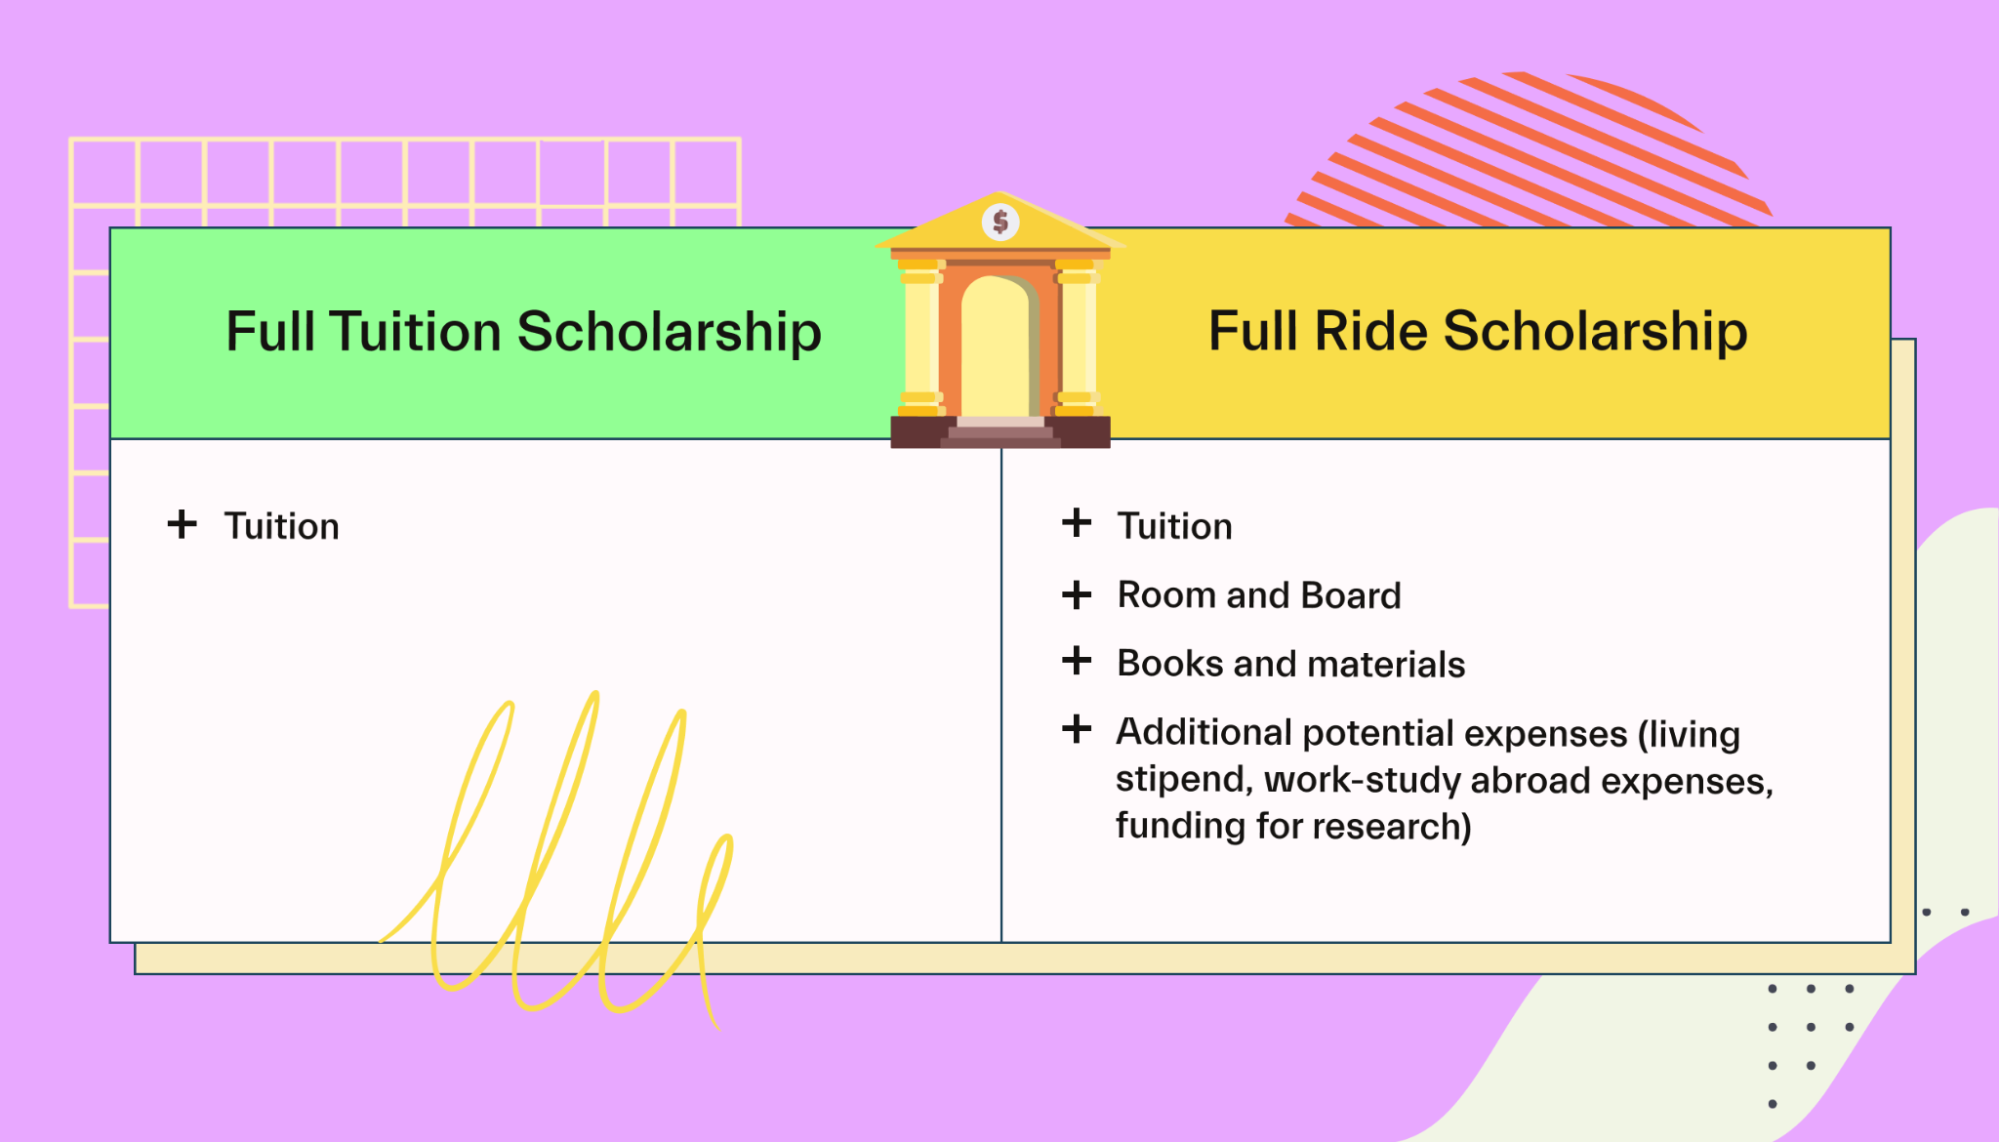 Full Tuition Scholarship vs